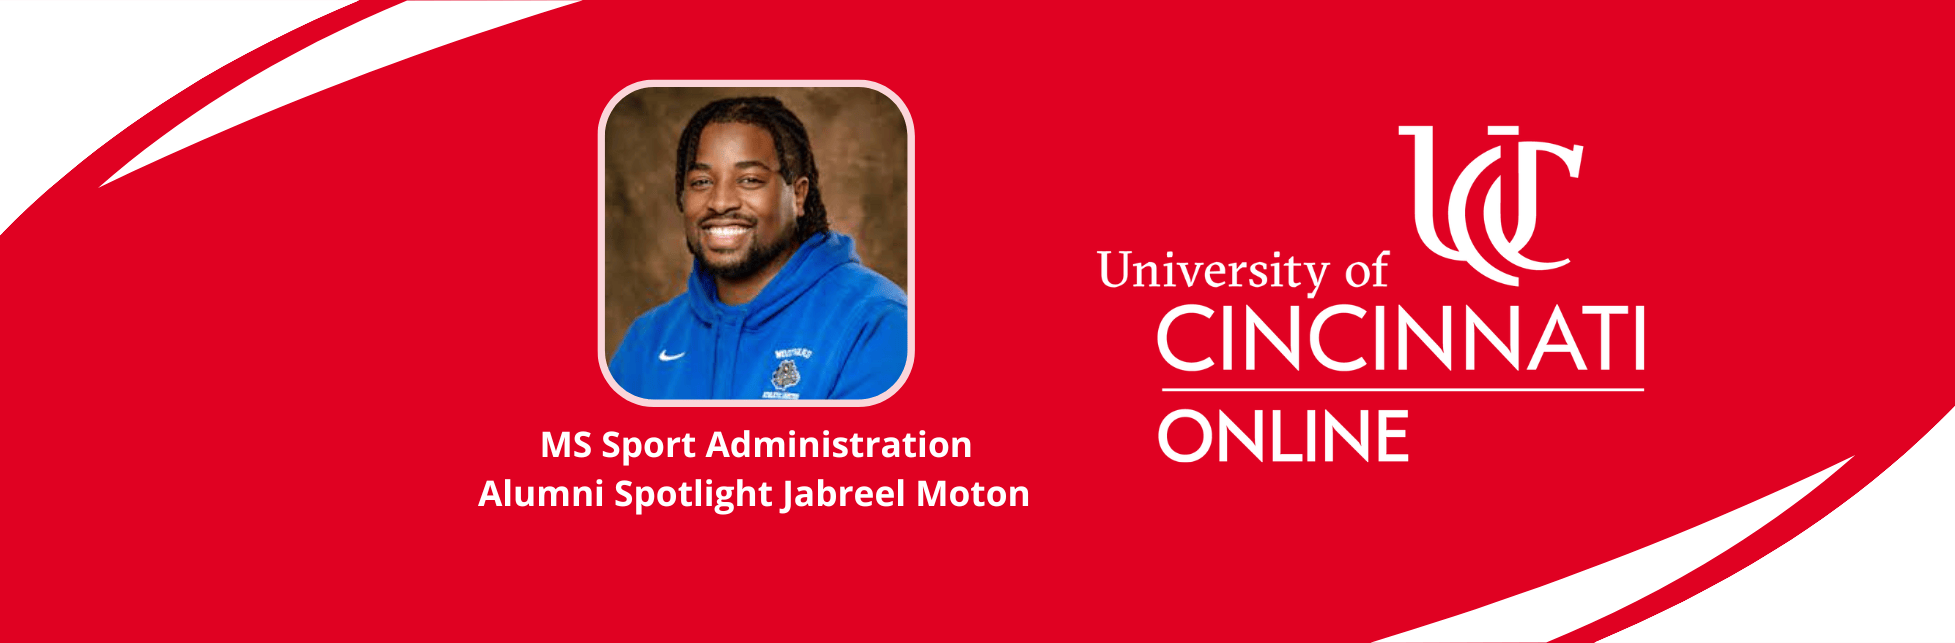 MS Sport Administration Alumni Jabreel Monton